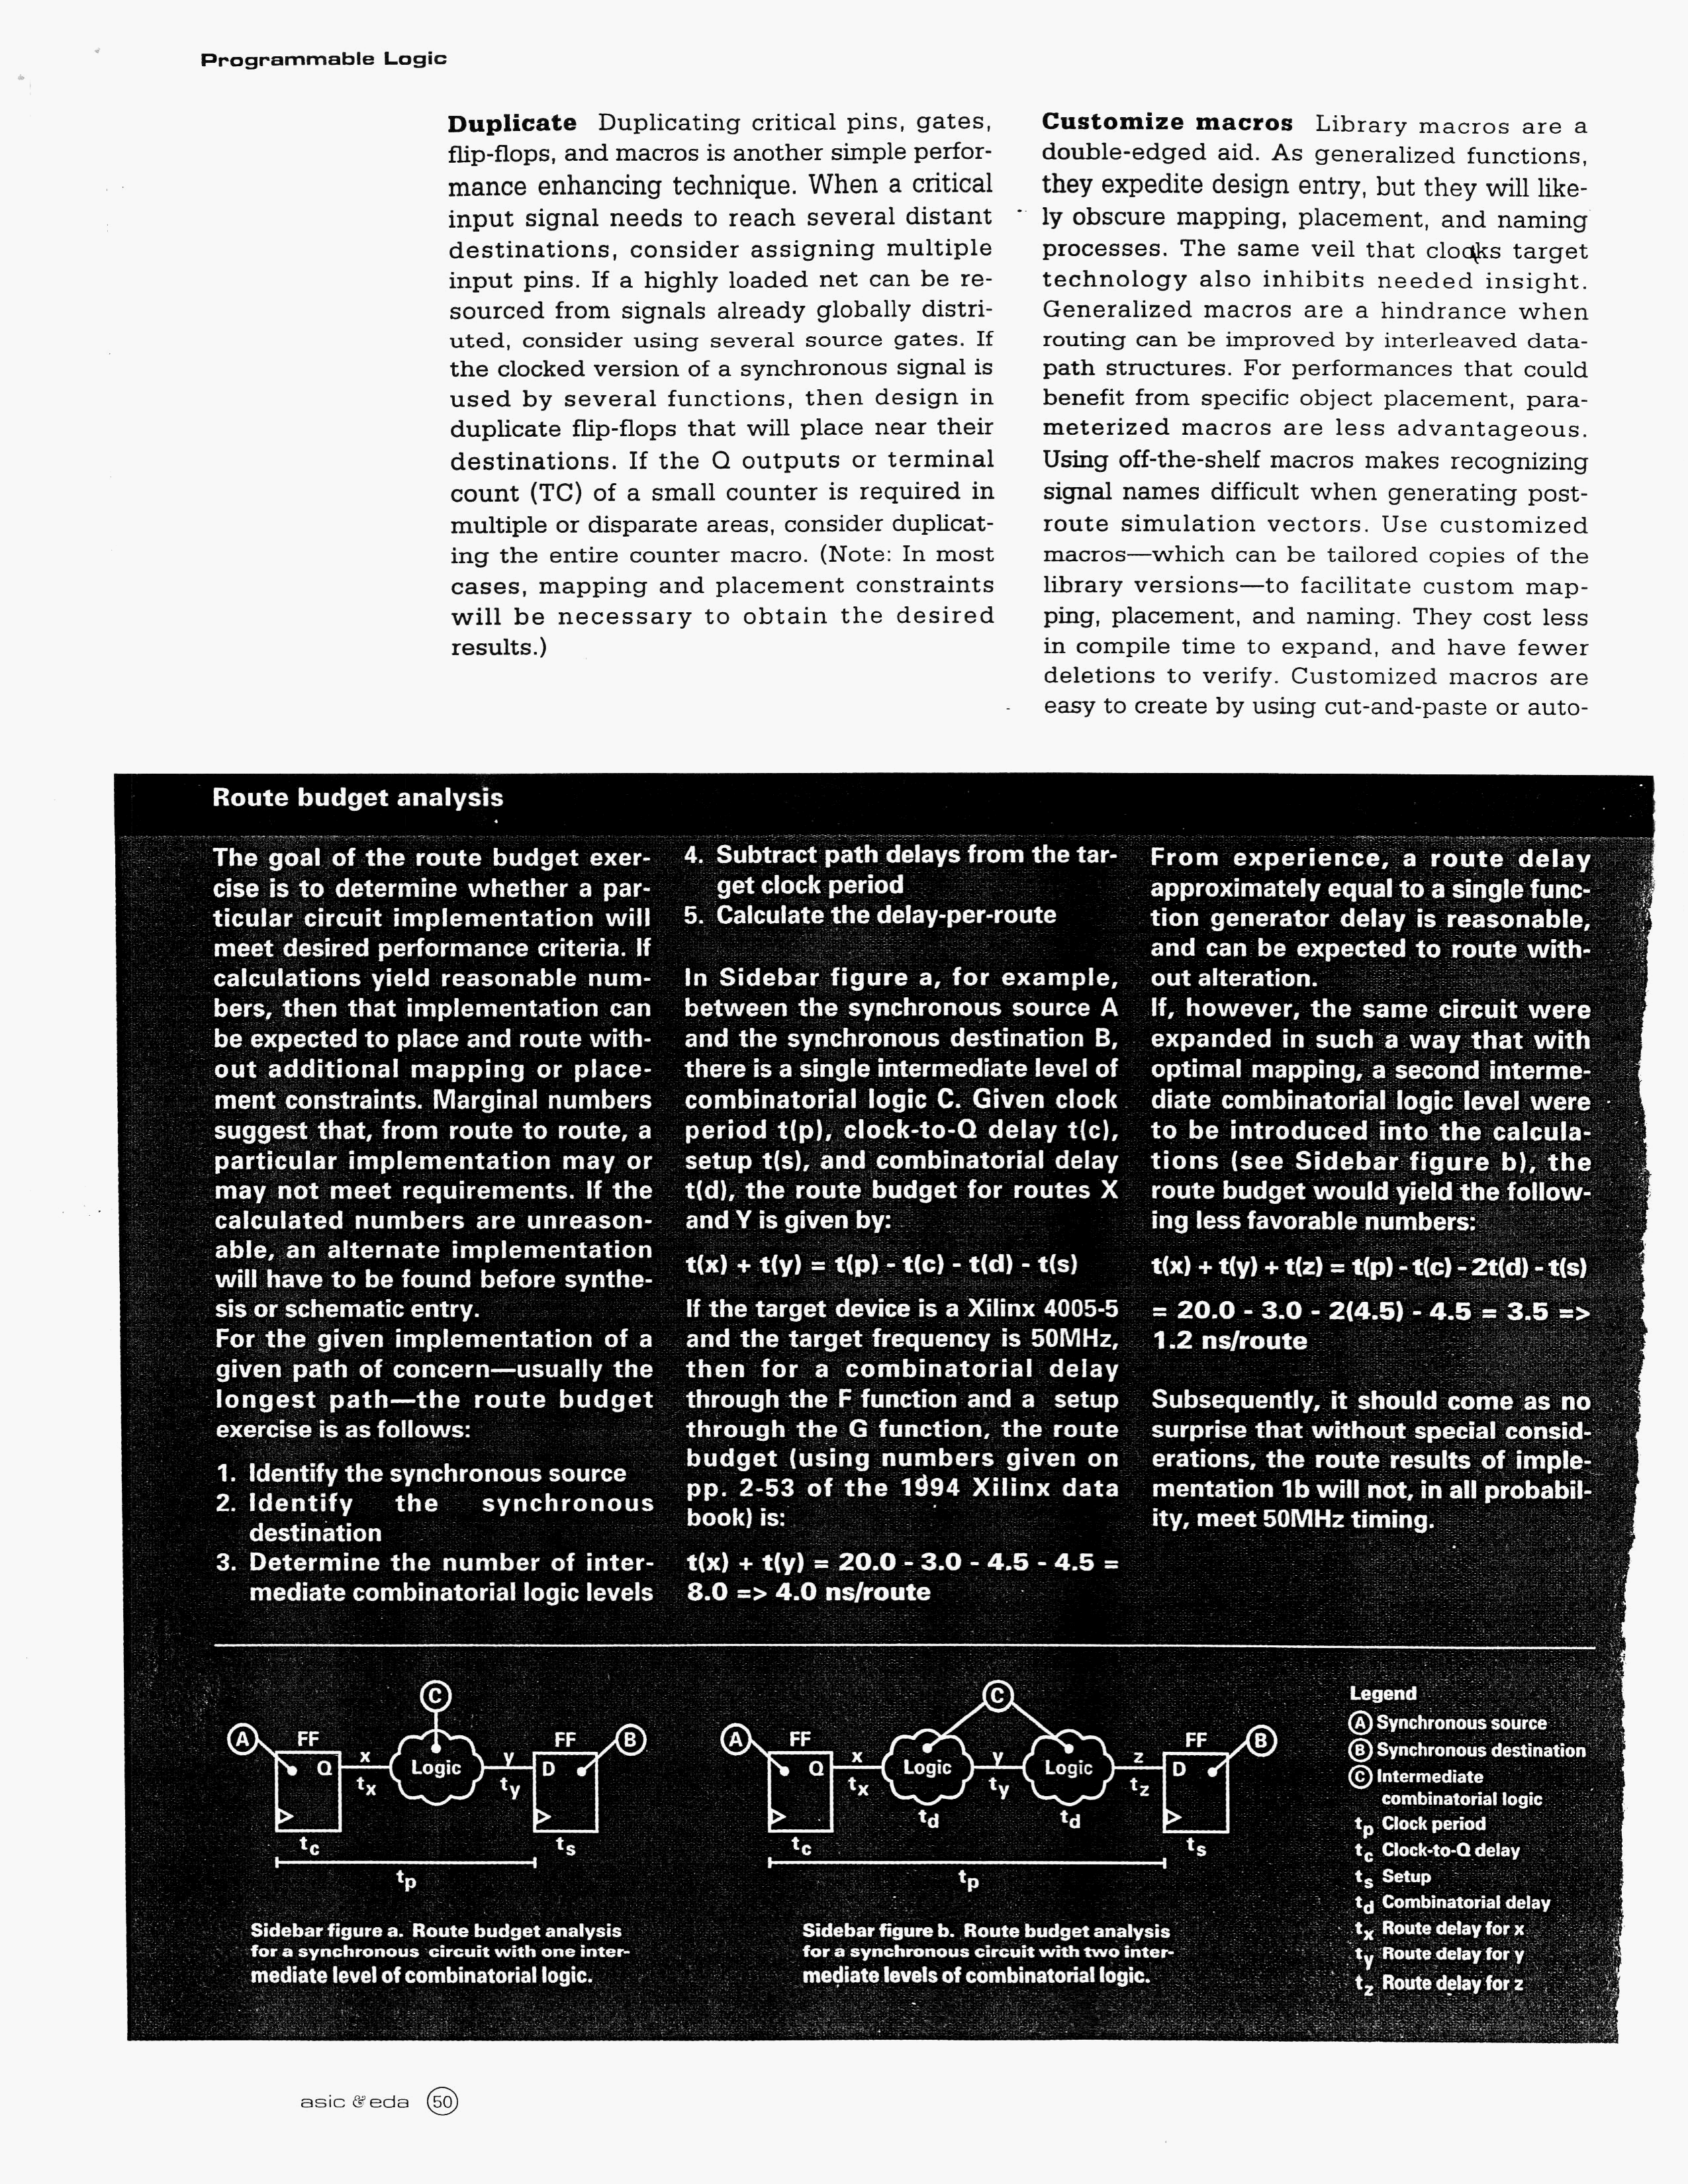 * Design Tips for High-Performance FPGA Design, Stephen Wasson, October 1994, ASIC & EDA page 5 *